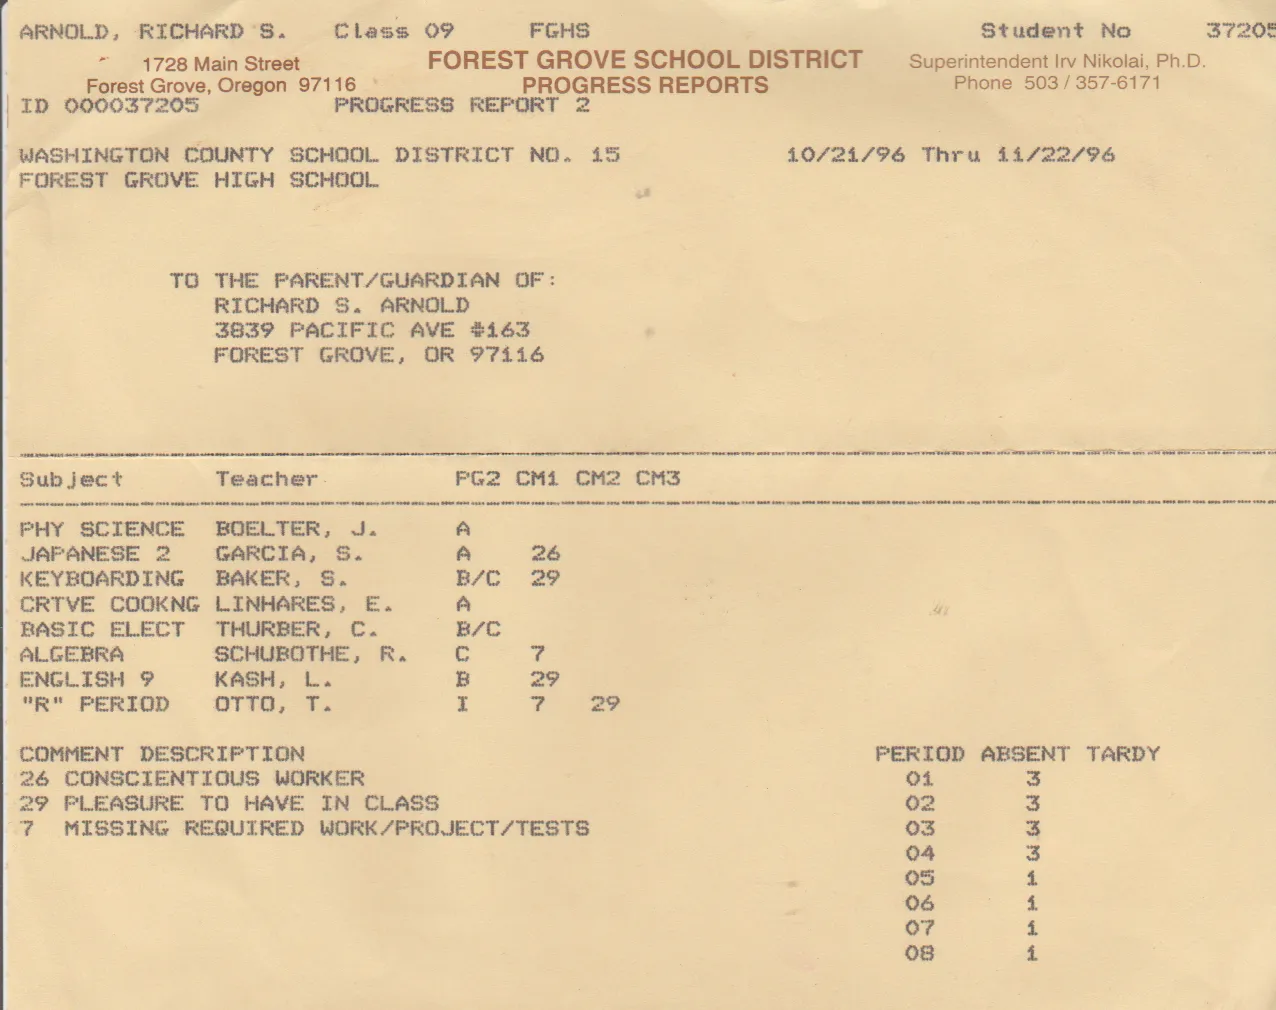 1996-11-22 - Friday - Rick - FGHS Grade 09 Progress Report.png